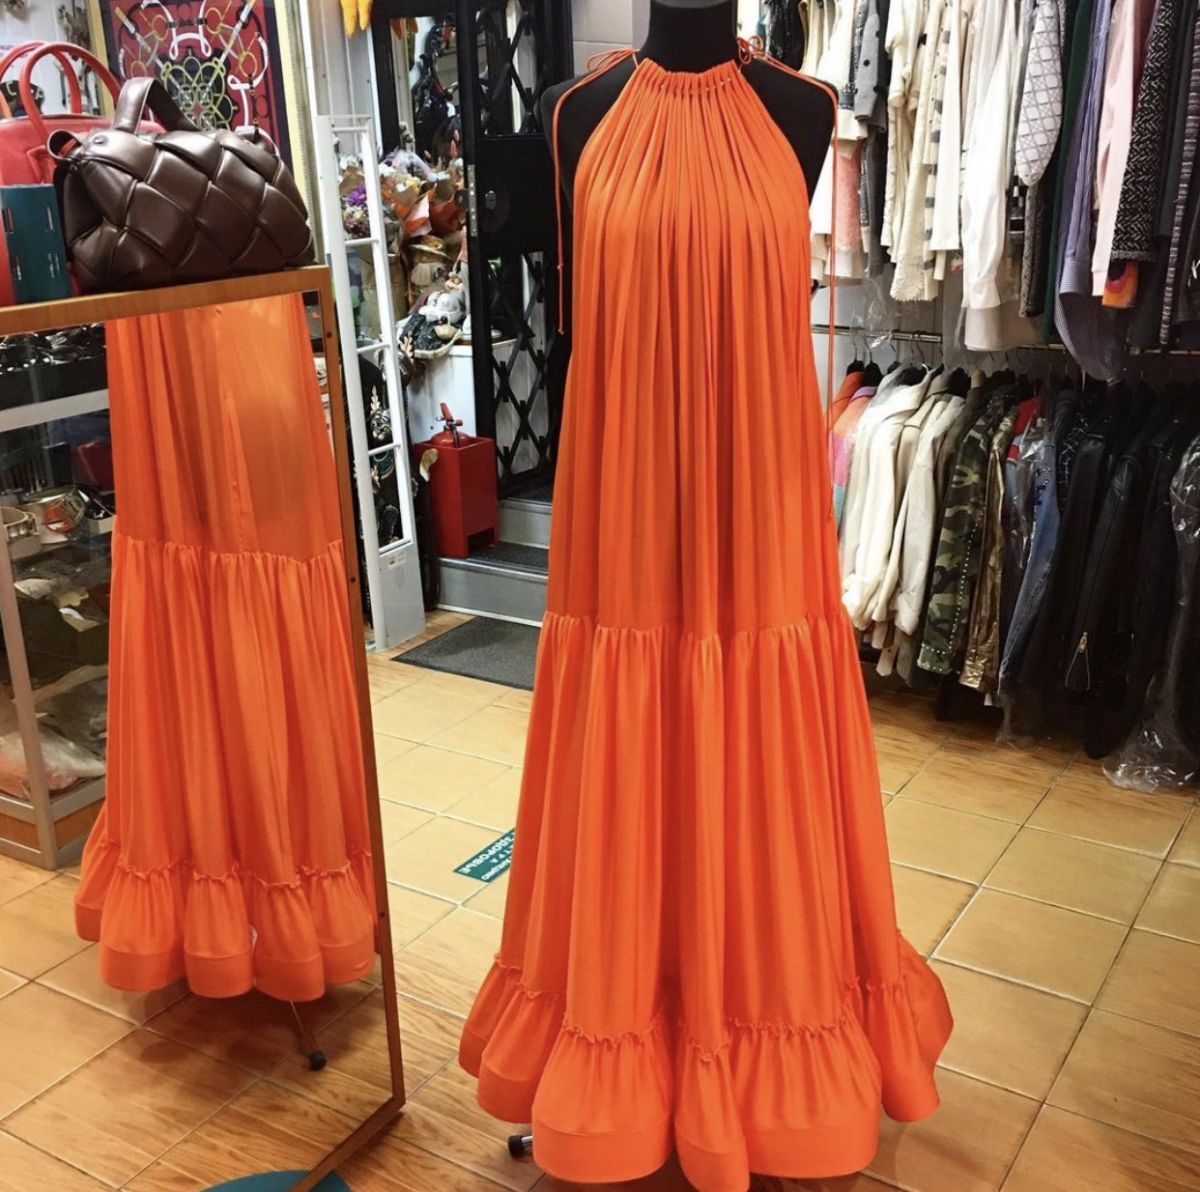 Платье /шёлк/ Stella Maccrtney  размер 38 цена 30 770 руб /с ценником/